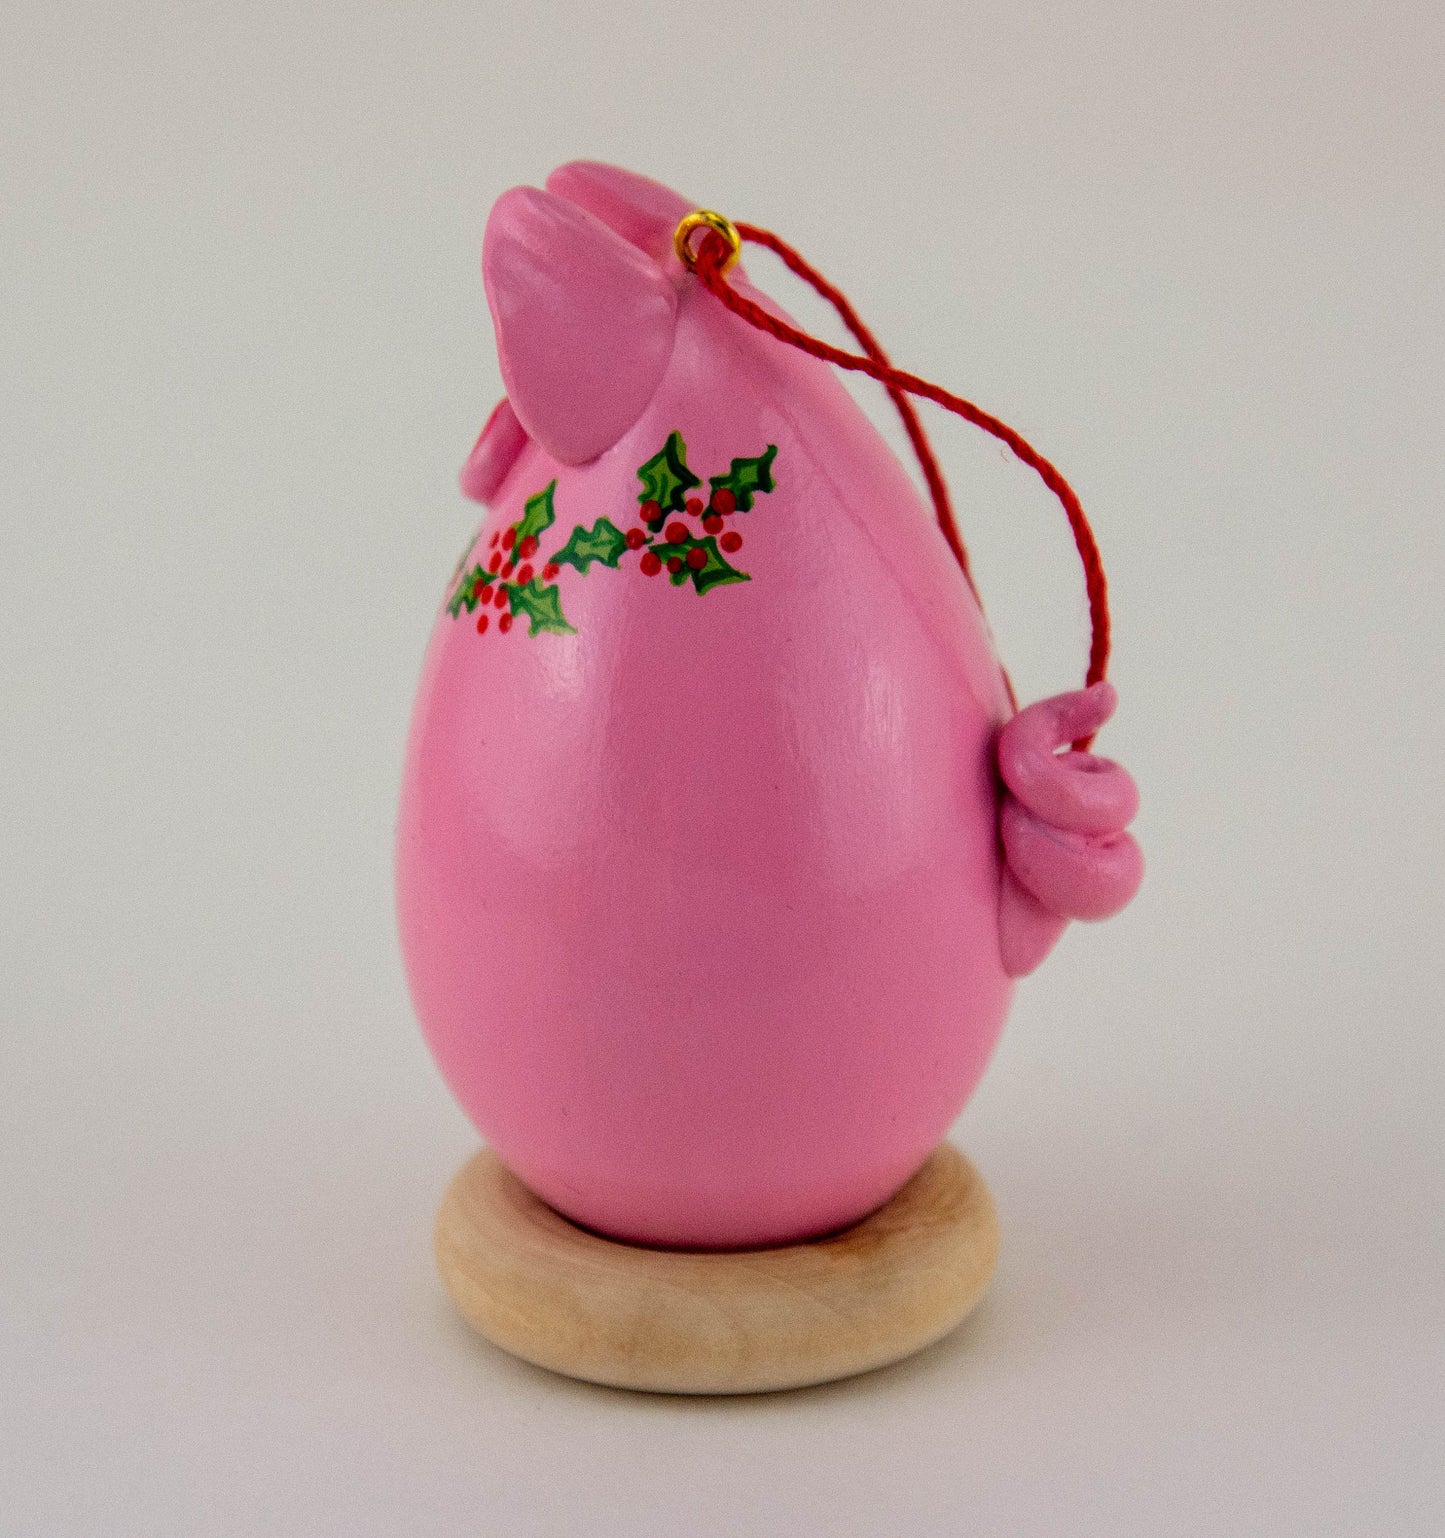 Pig Ornament - Gourd Art - Holly Wreath - Handmade